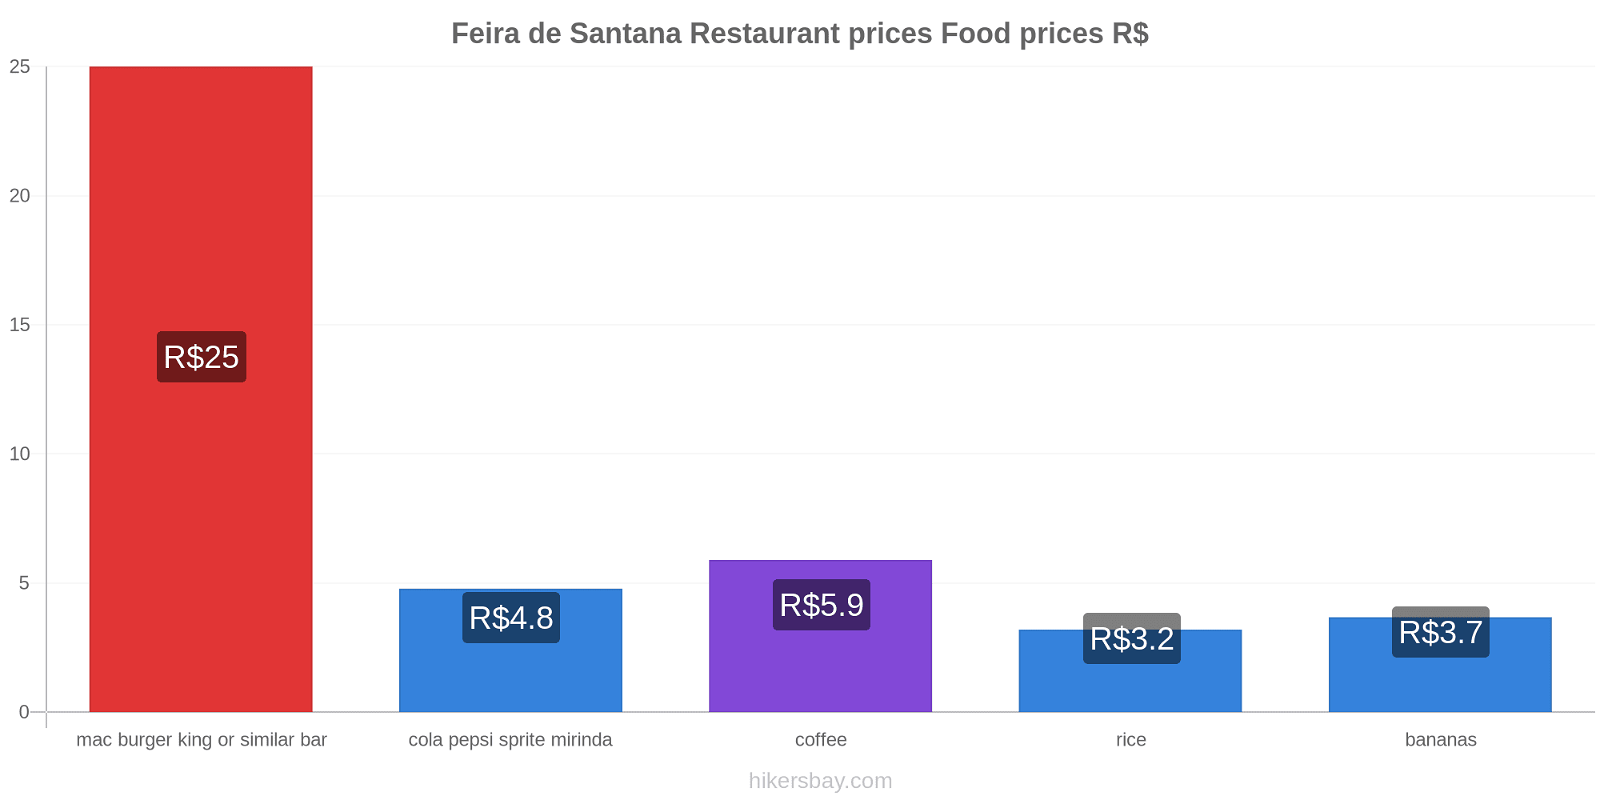 Feira de Santana price changes hikersbay.com